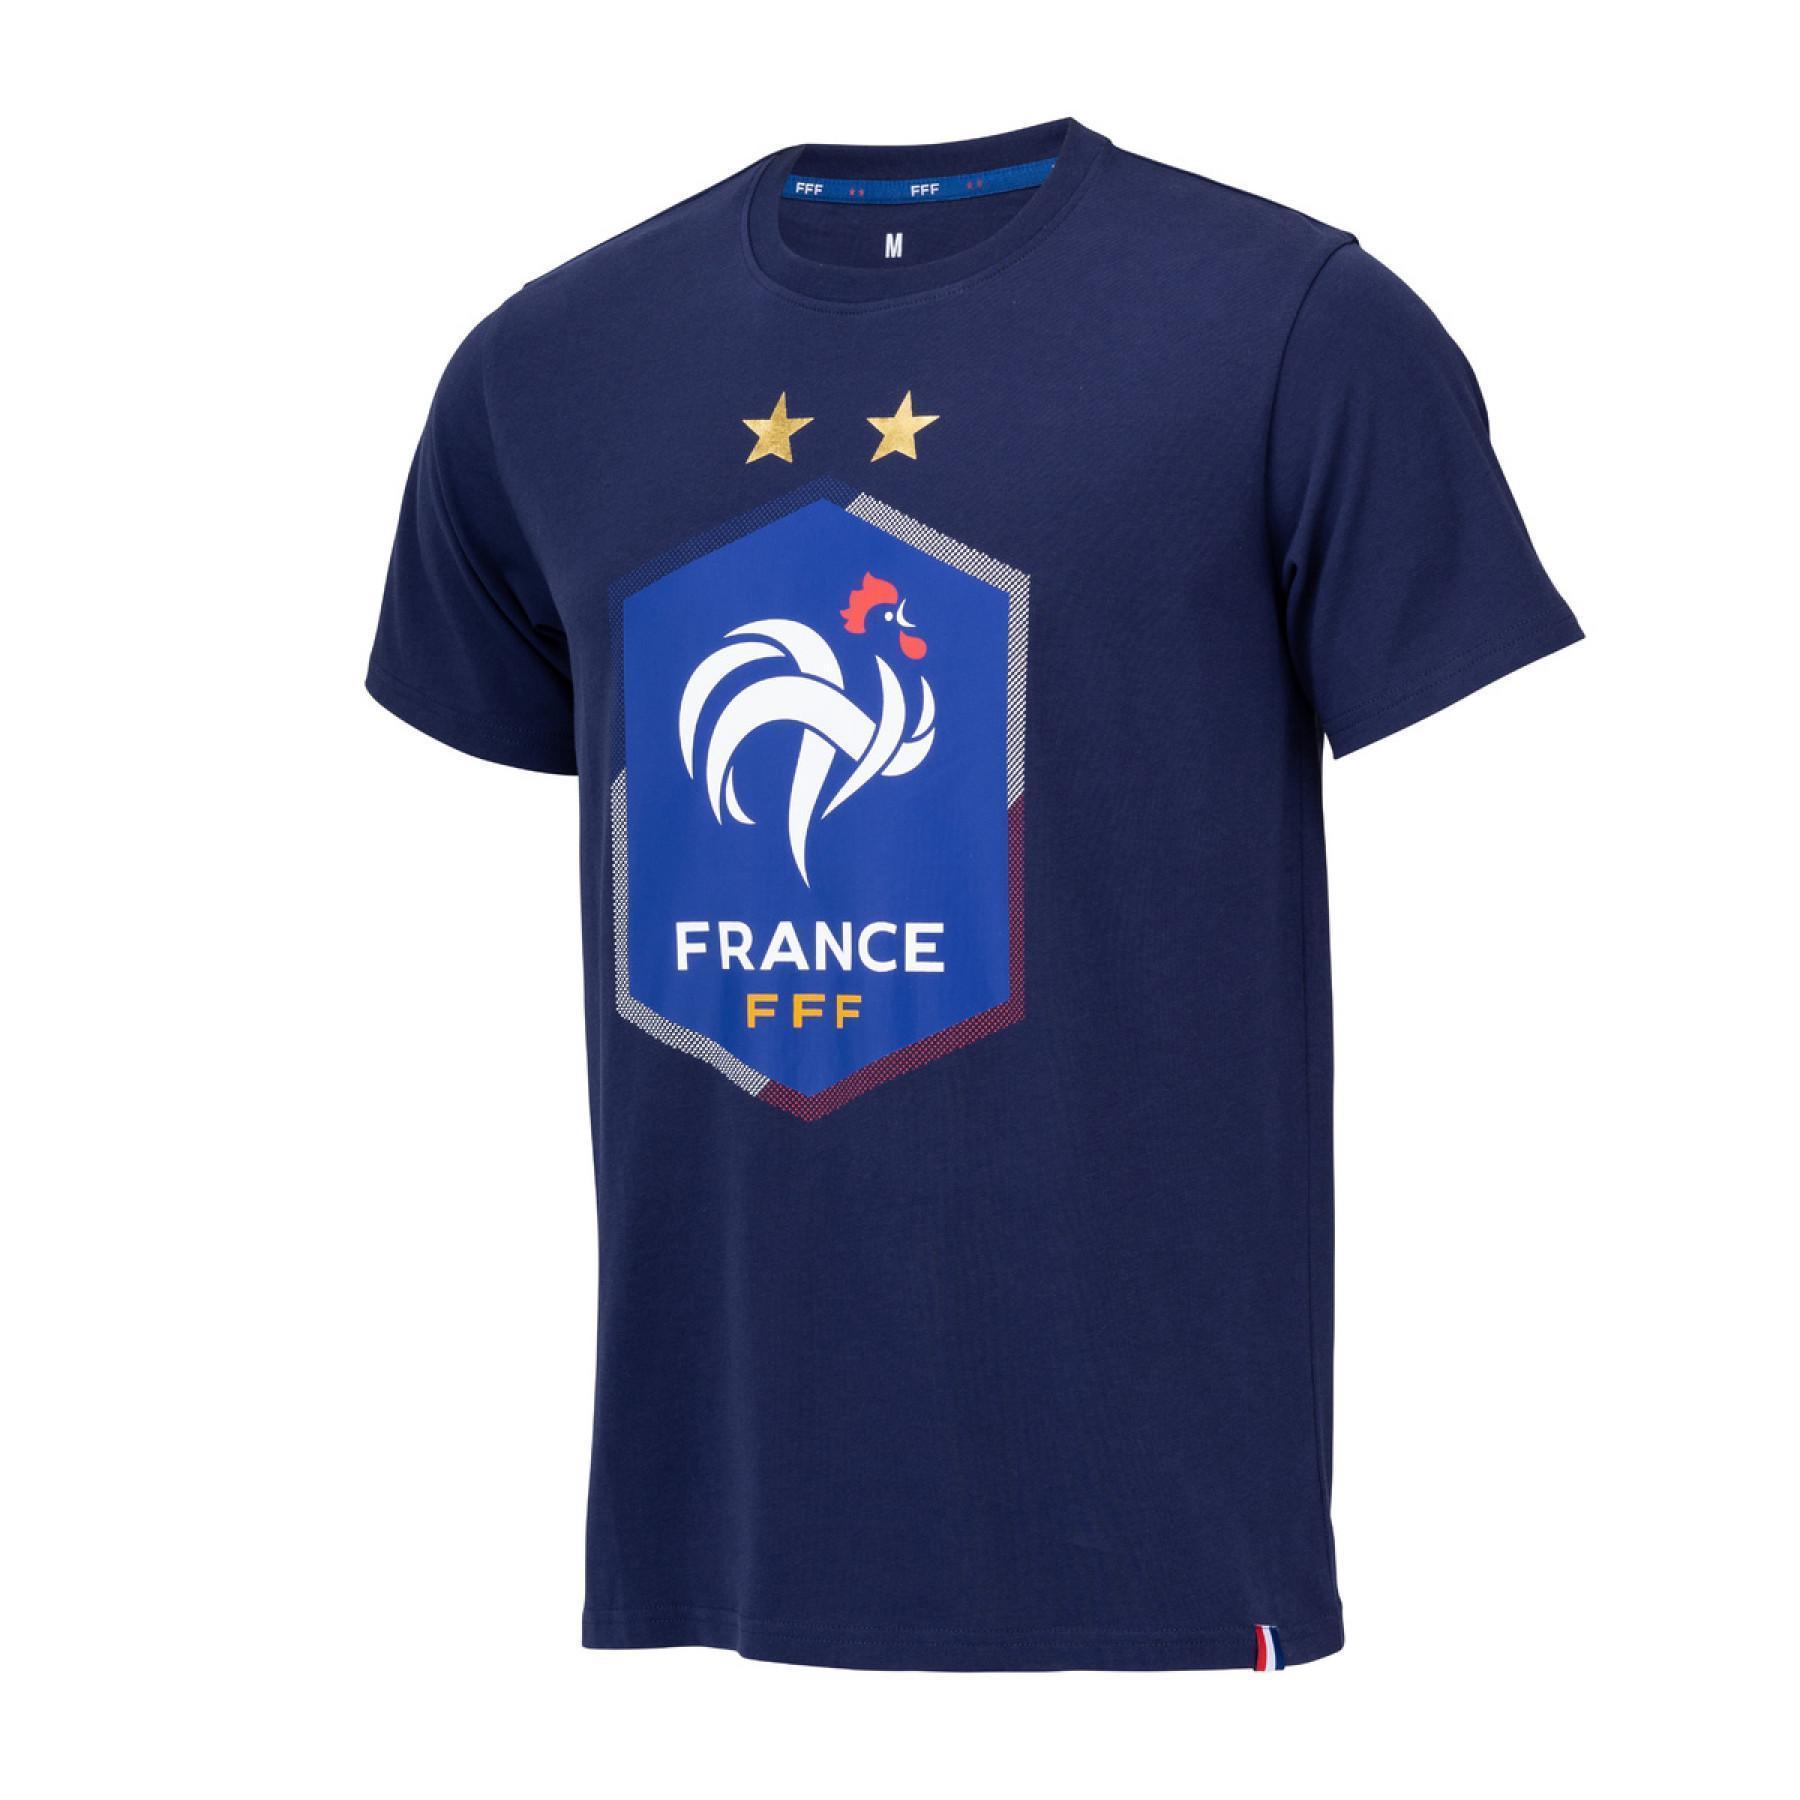 Child's T-shirt France Weeplay Big logo